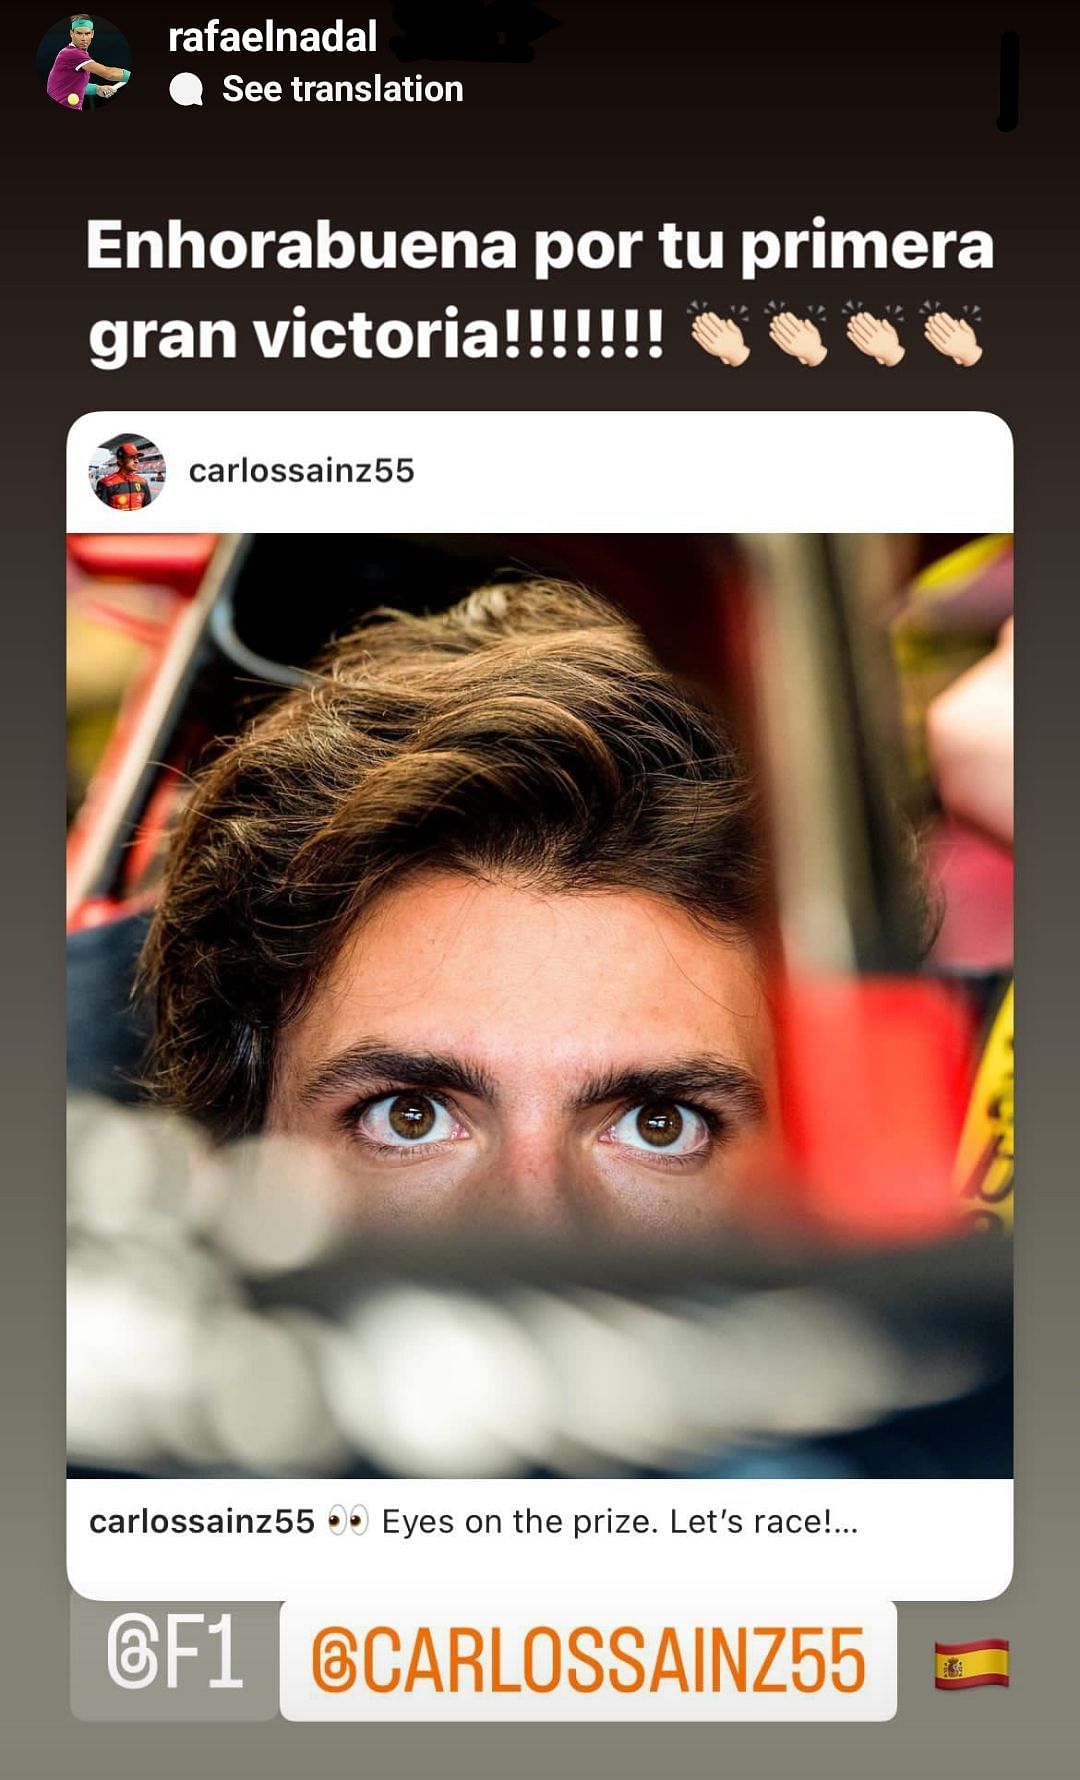 Credits: Rafael Nadal Instagram story